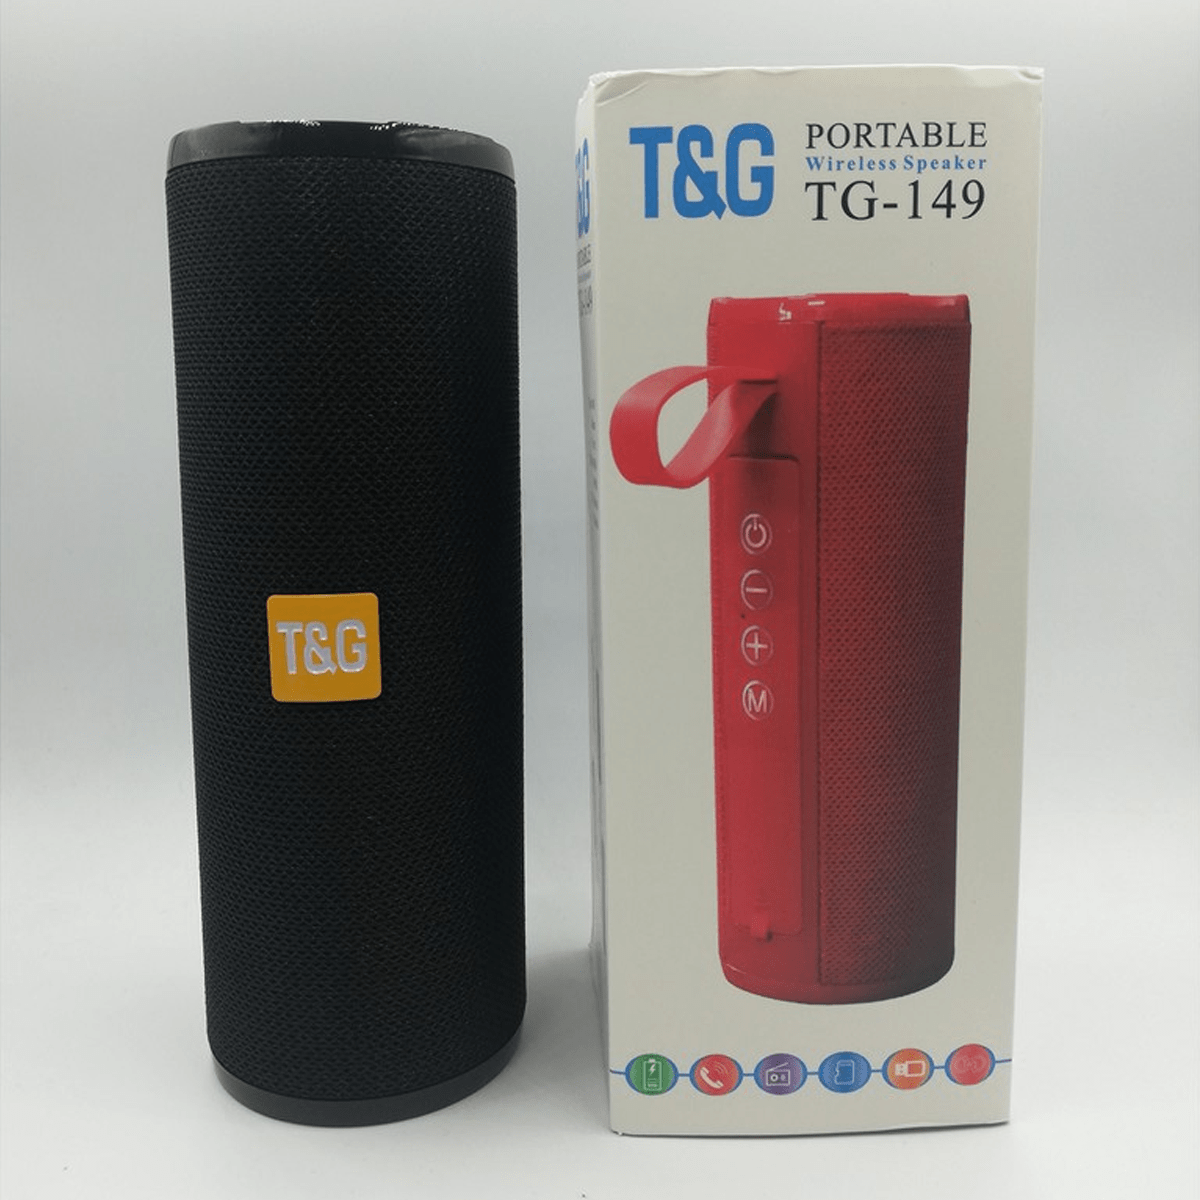 Portable Wireless Speaker TG149 - T&G